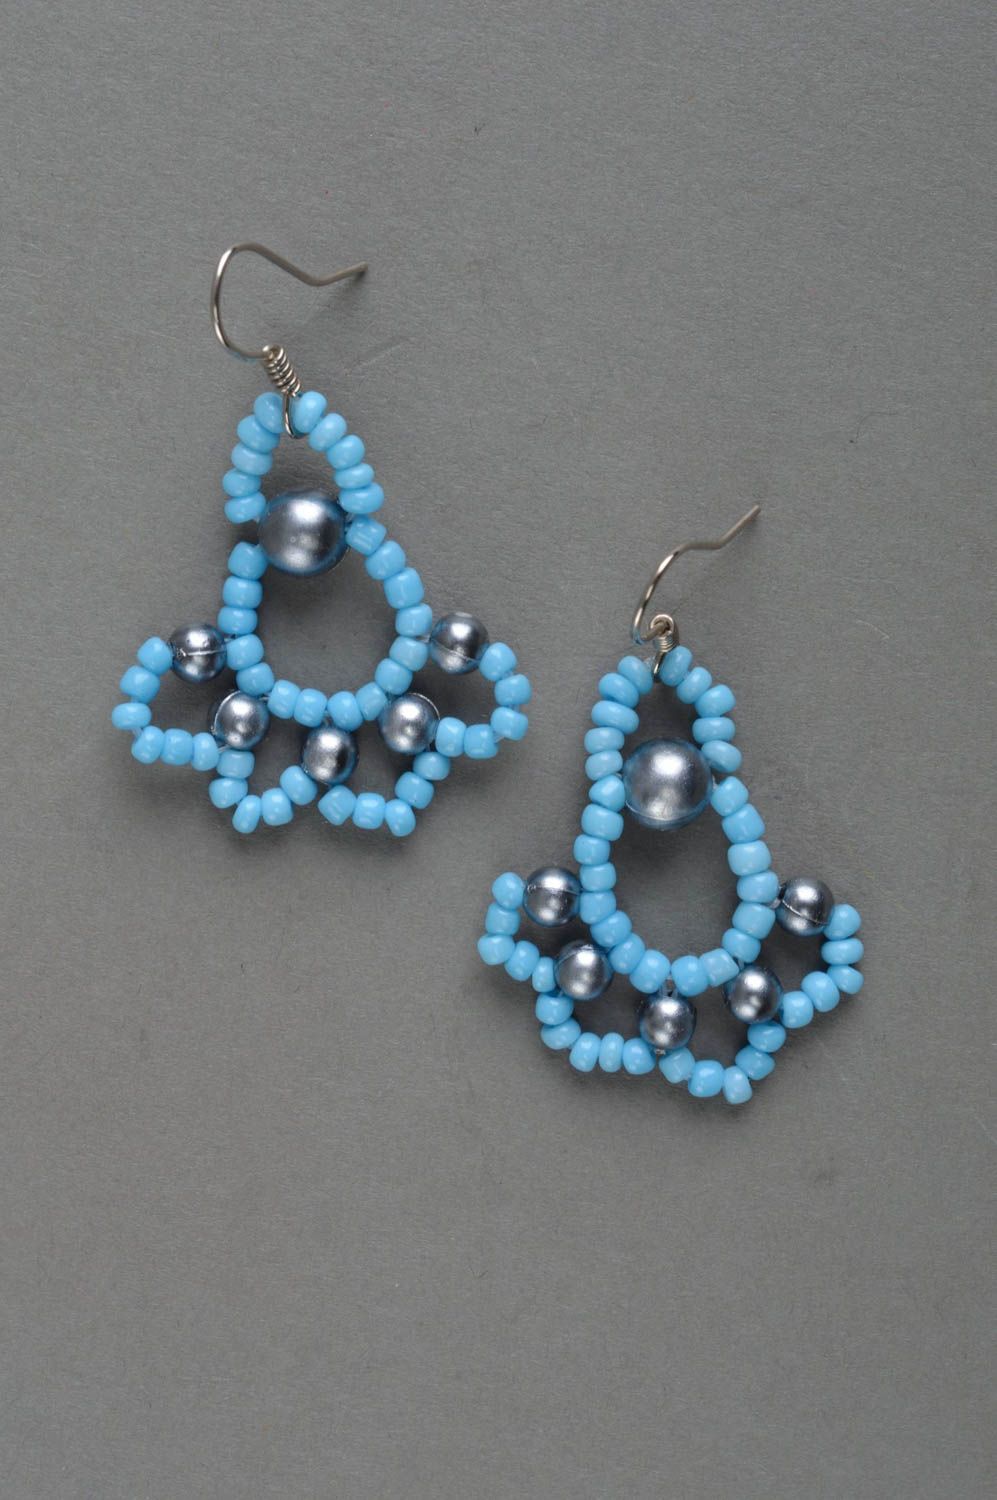 Beautiful handmade beaded earrings unusual jewelry designs bead weaving ideas photo 2